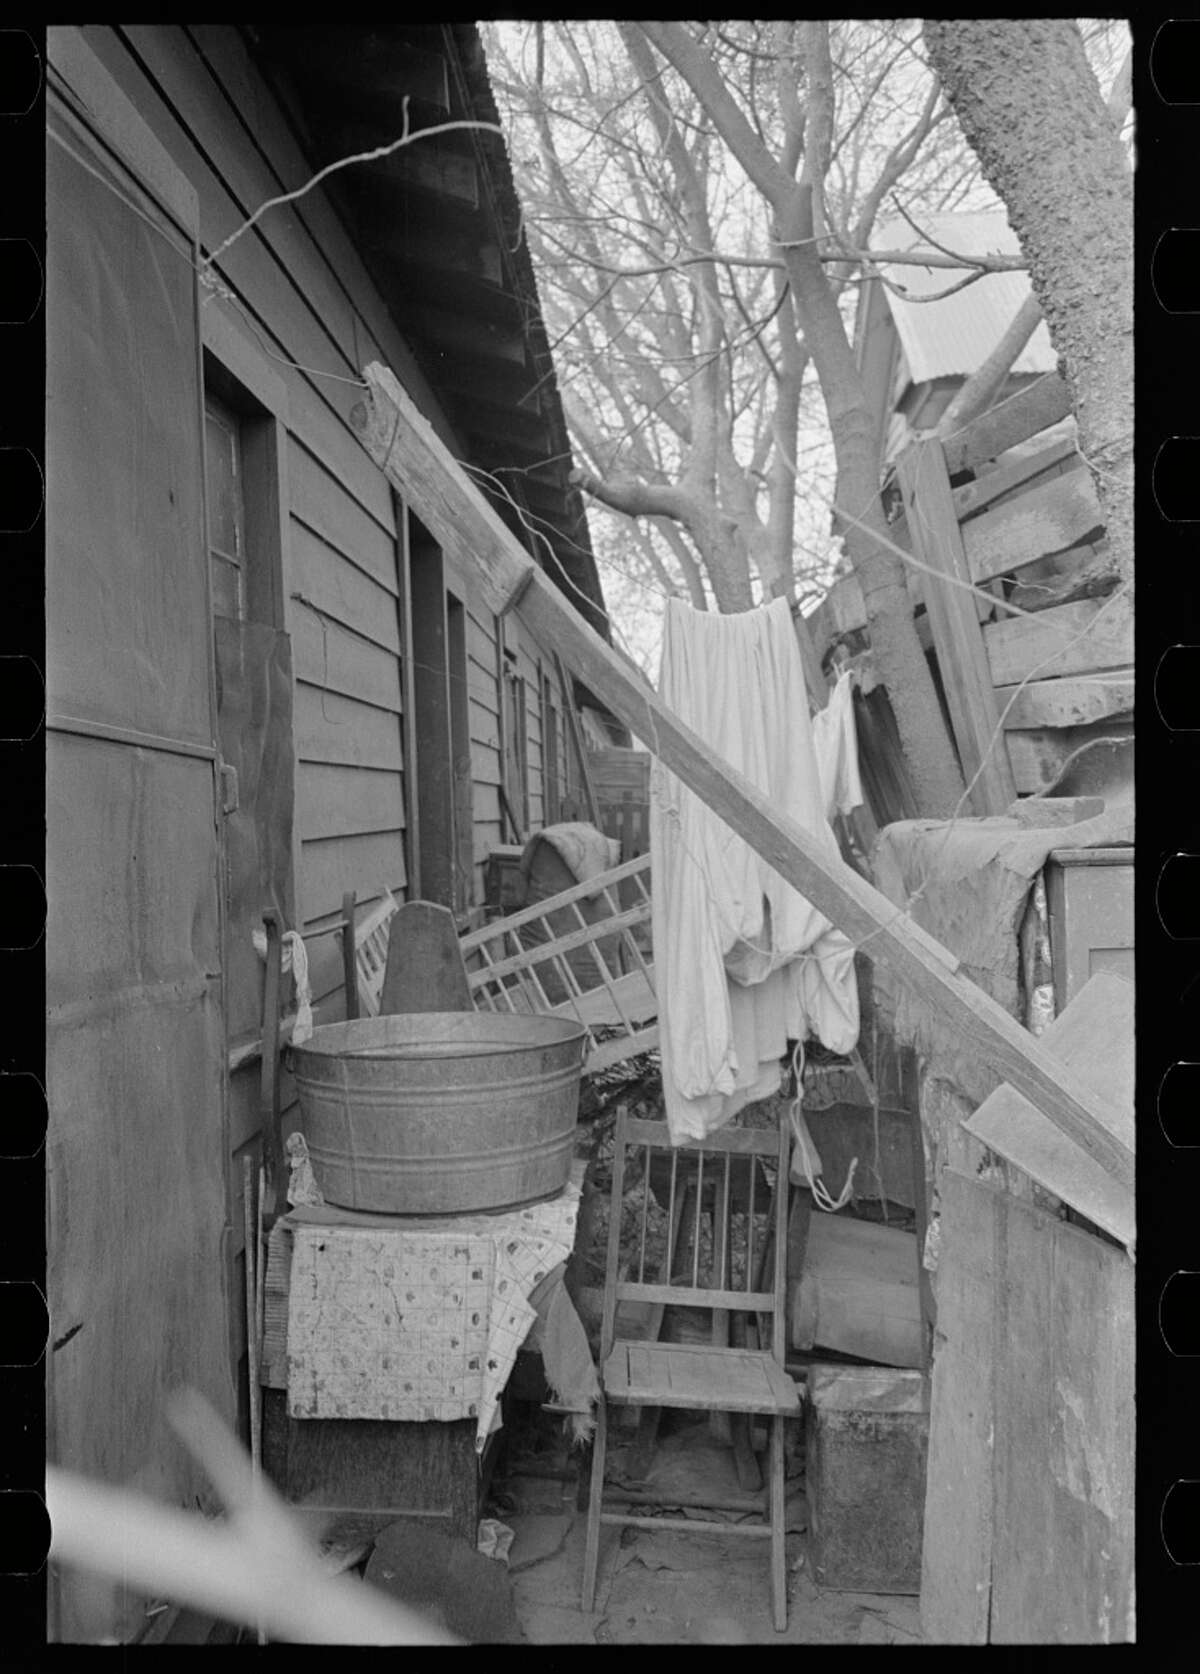 Historical photos show San Antonio faces of Great Depression